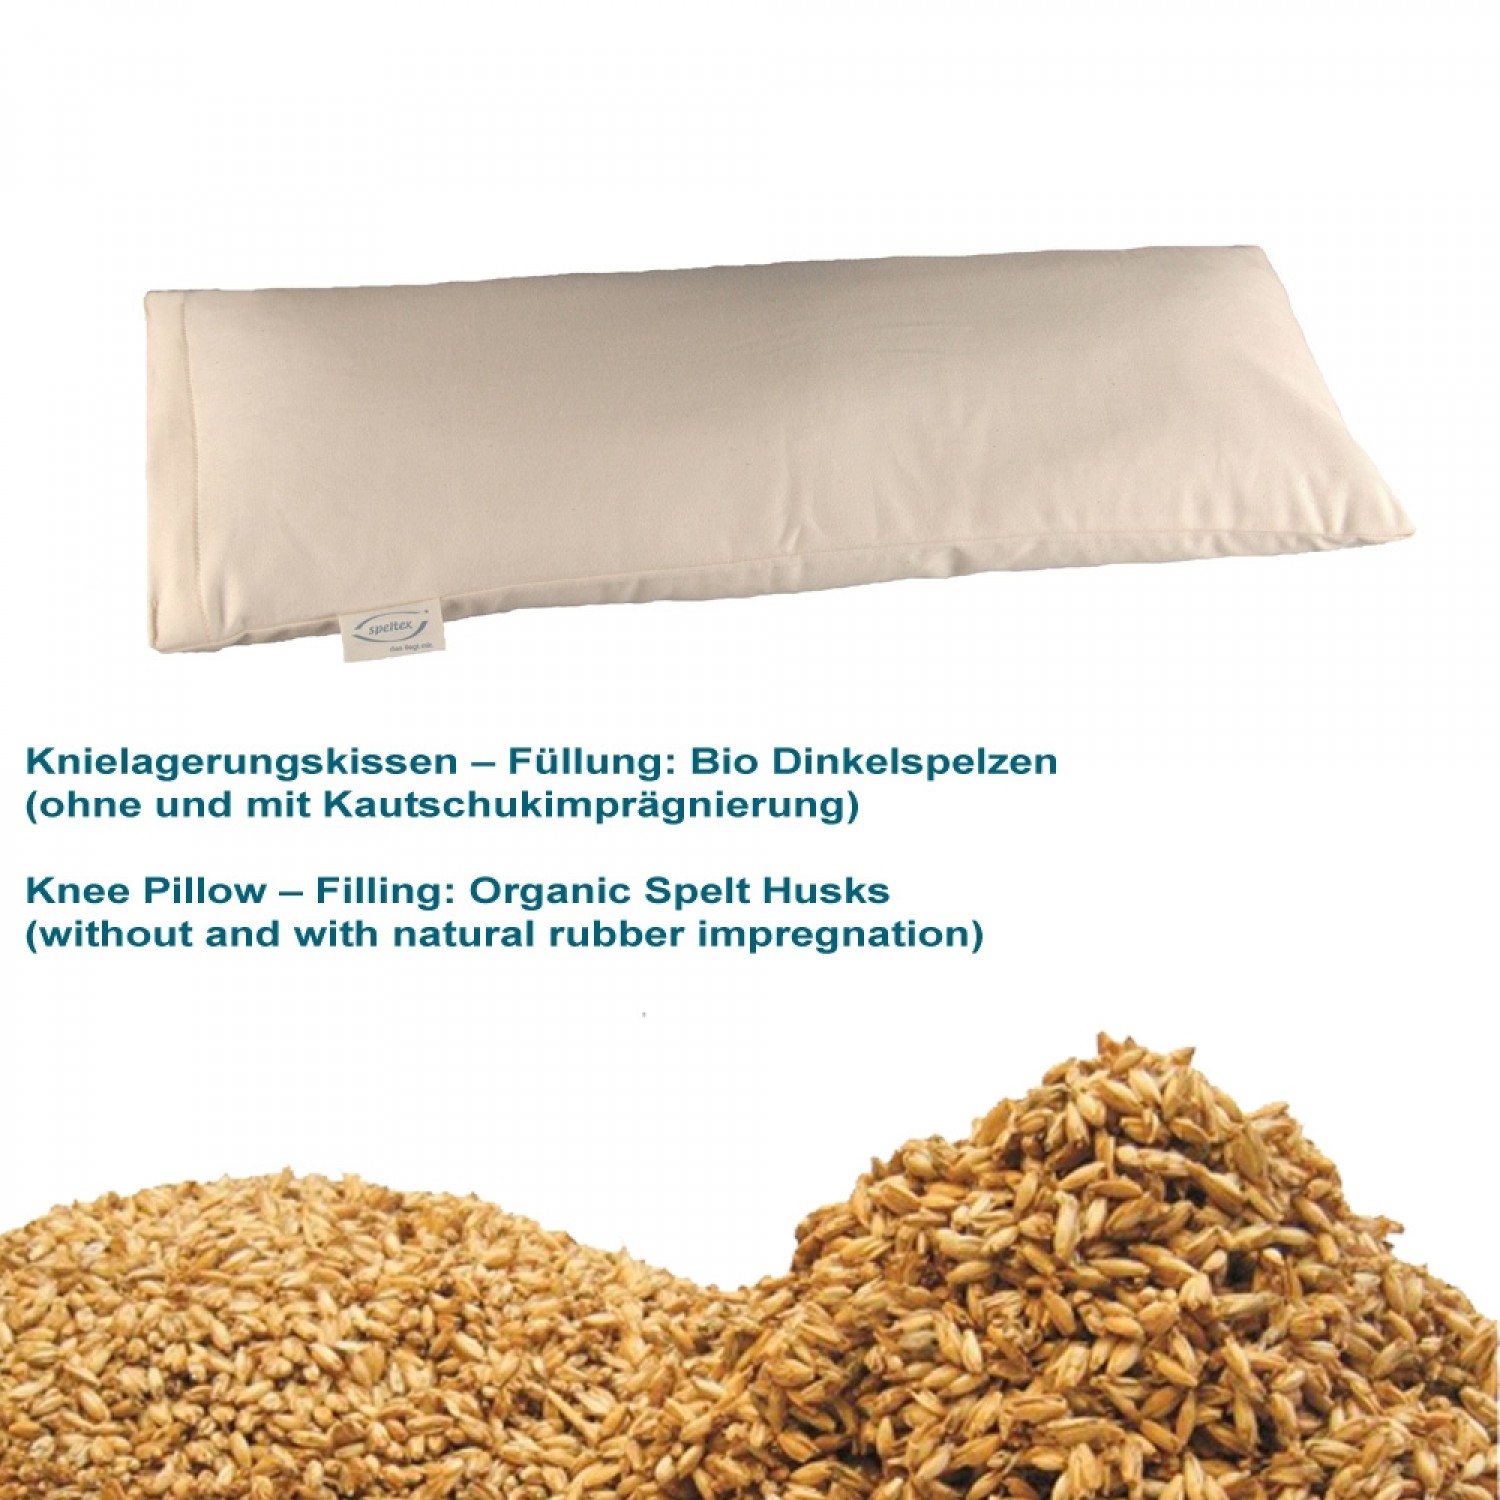 Knee pillow with organic spelt husks | speltex